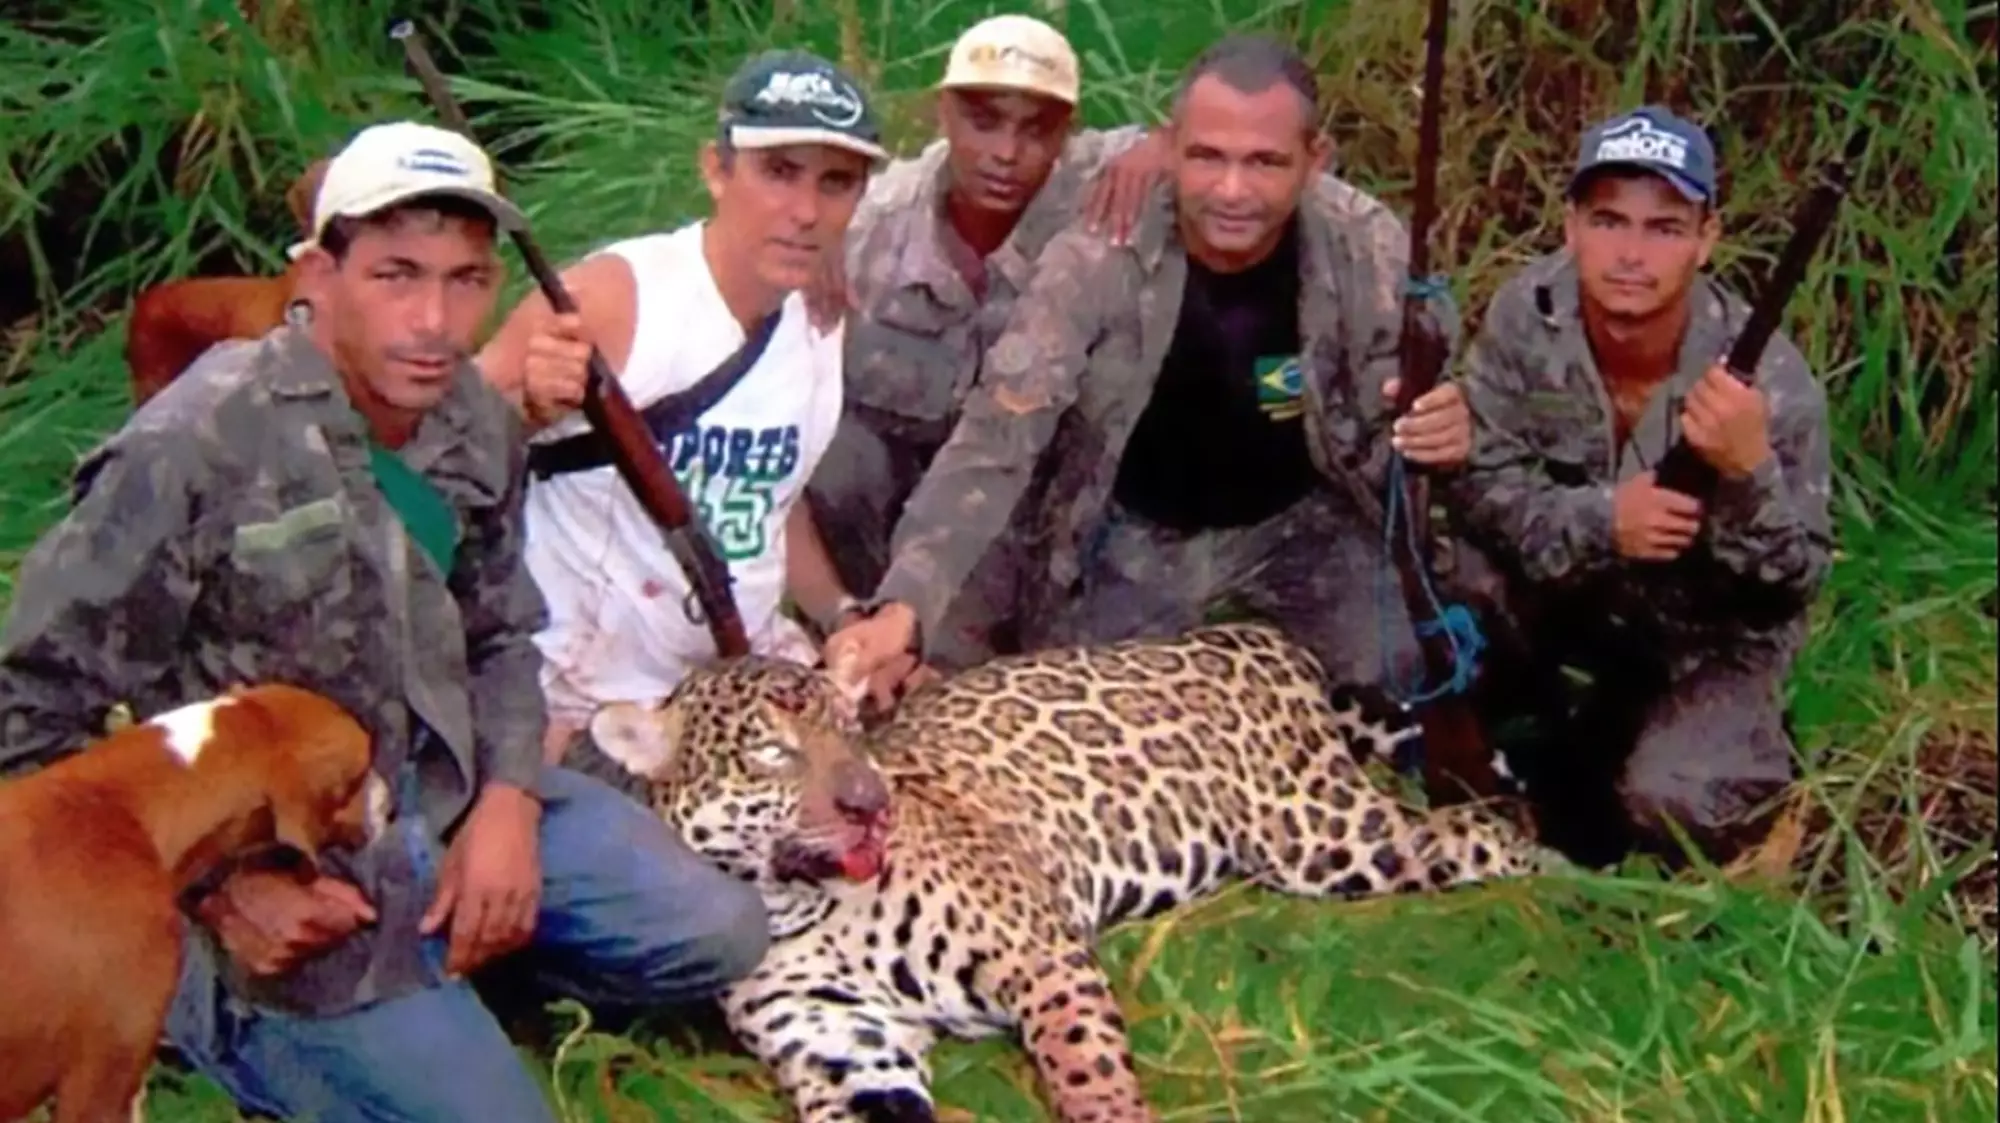 The poachers with a killed jaguar.